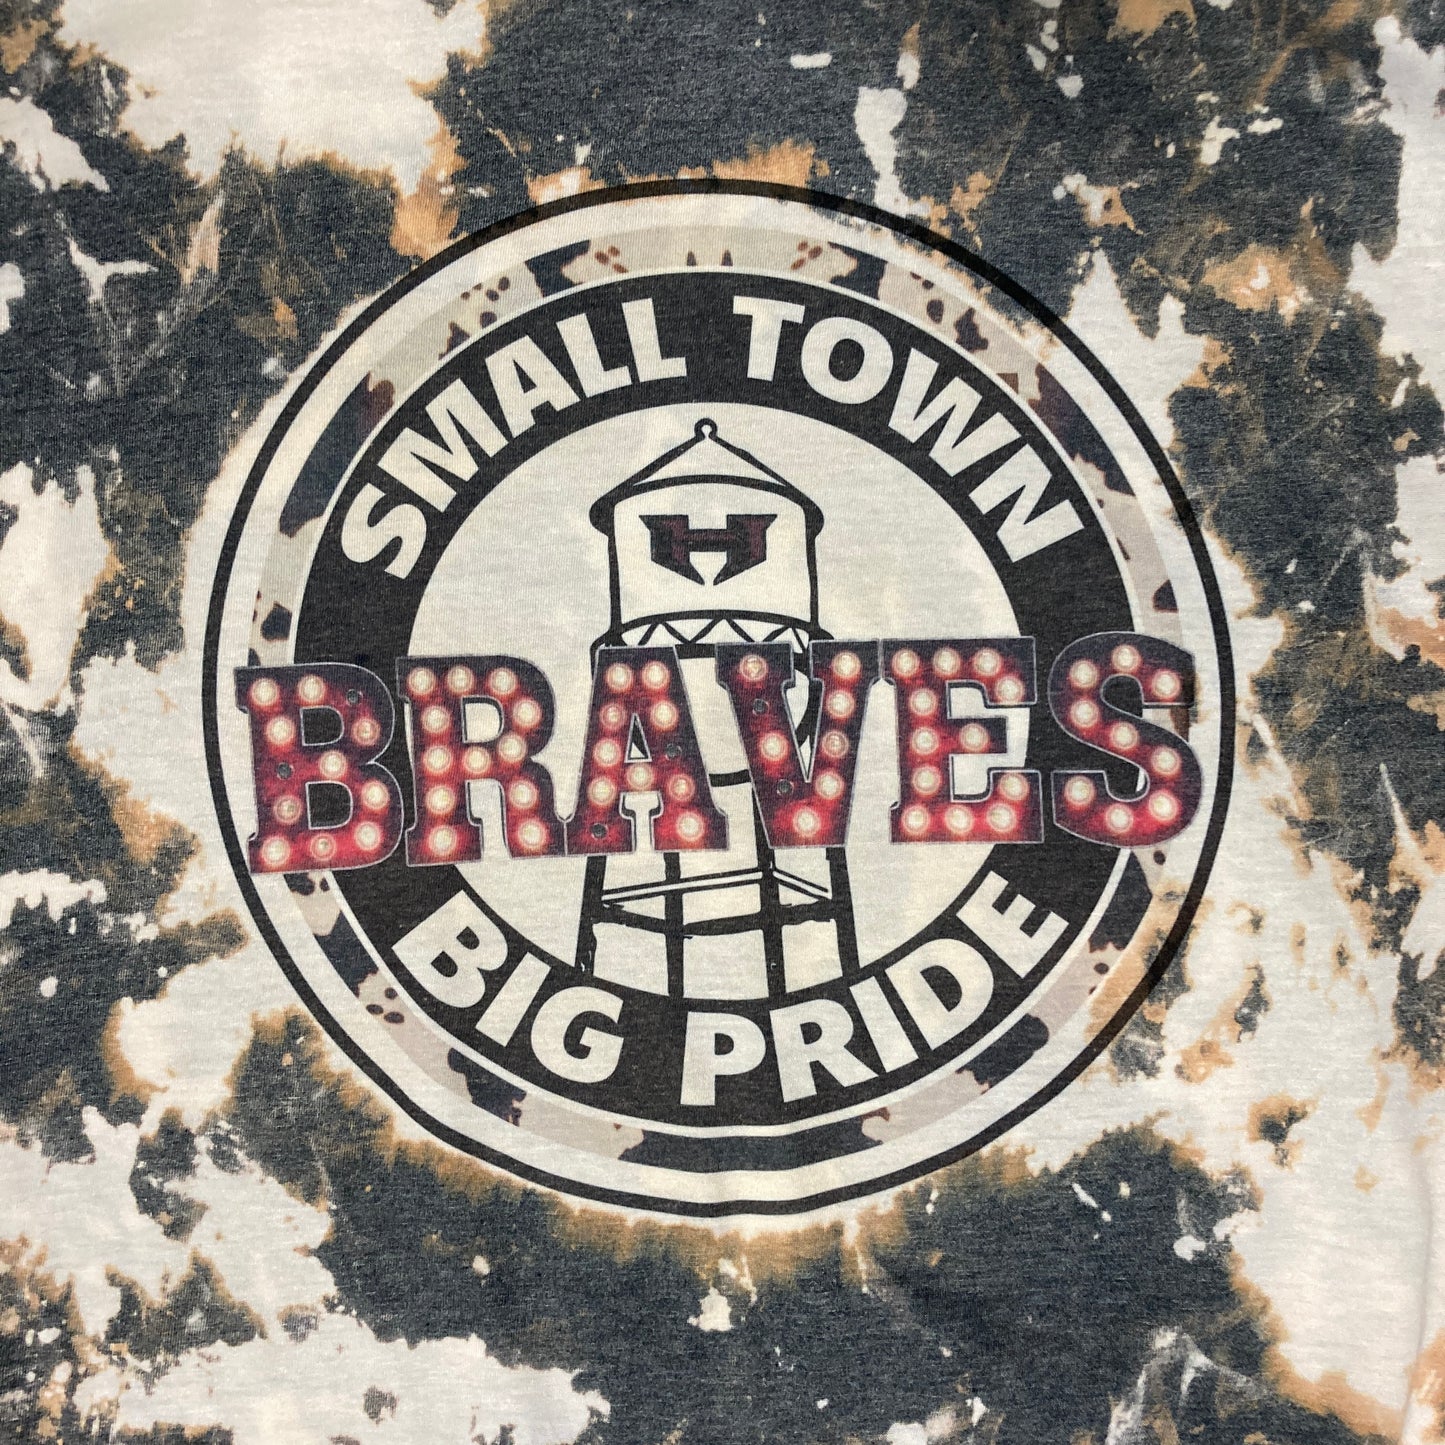 Cowhide Style Heard Braves Small Town Big Pride Shirt